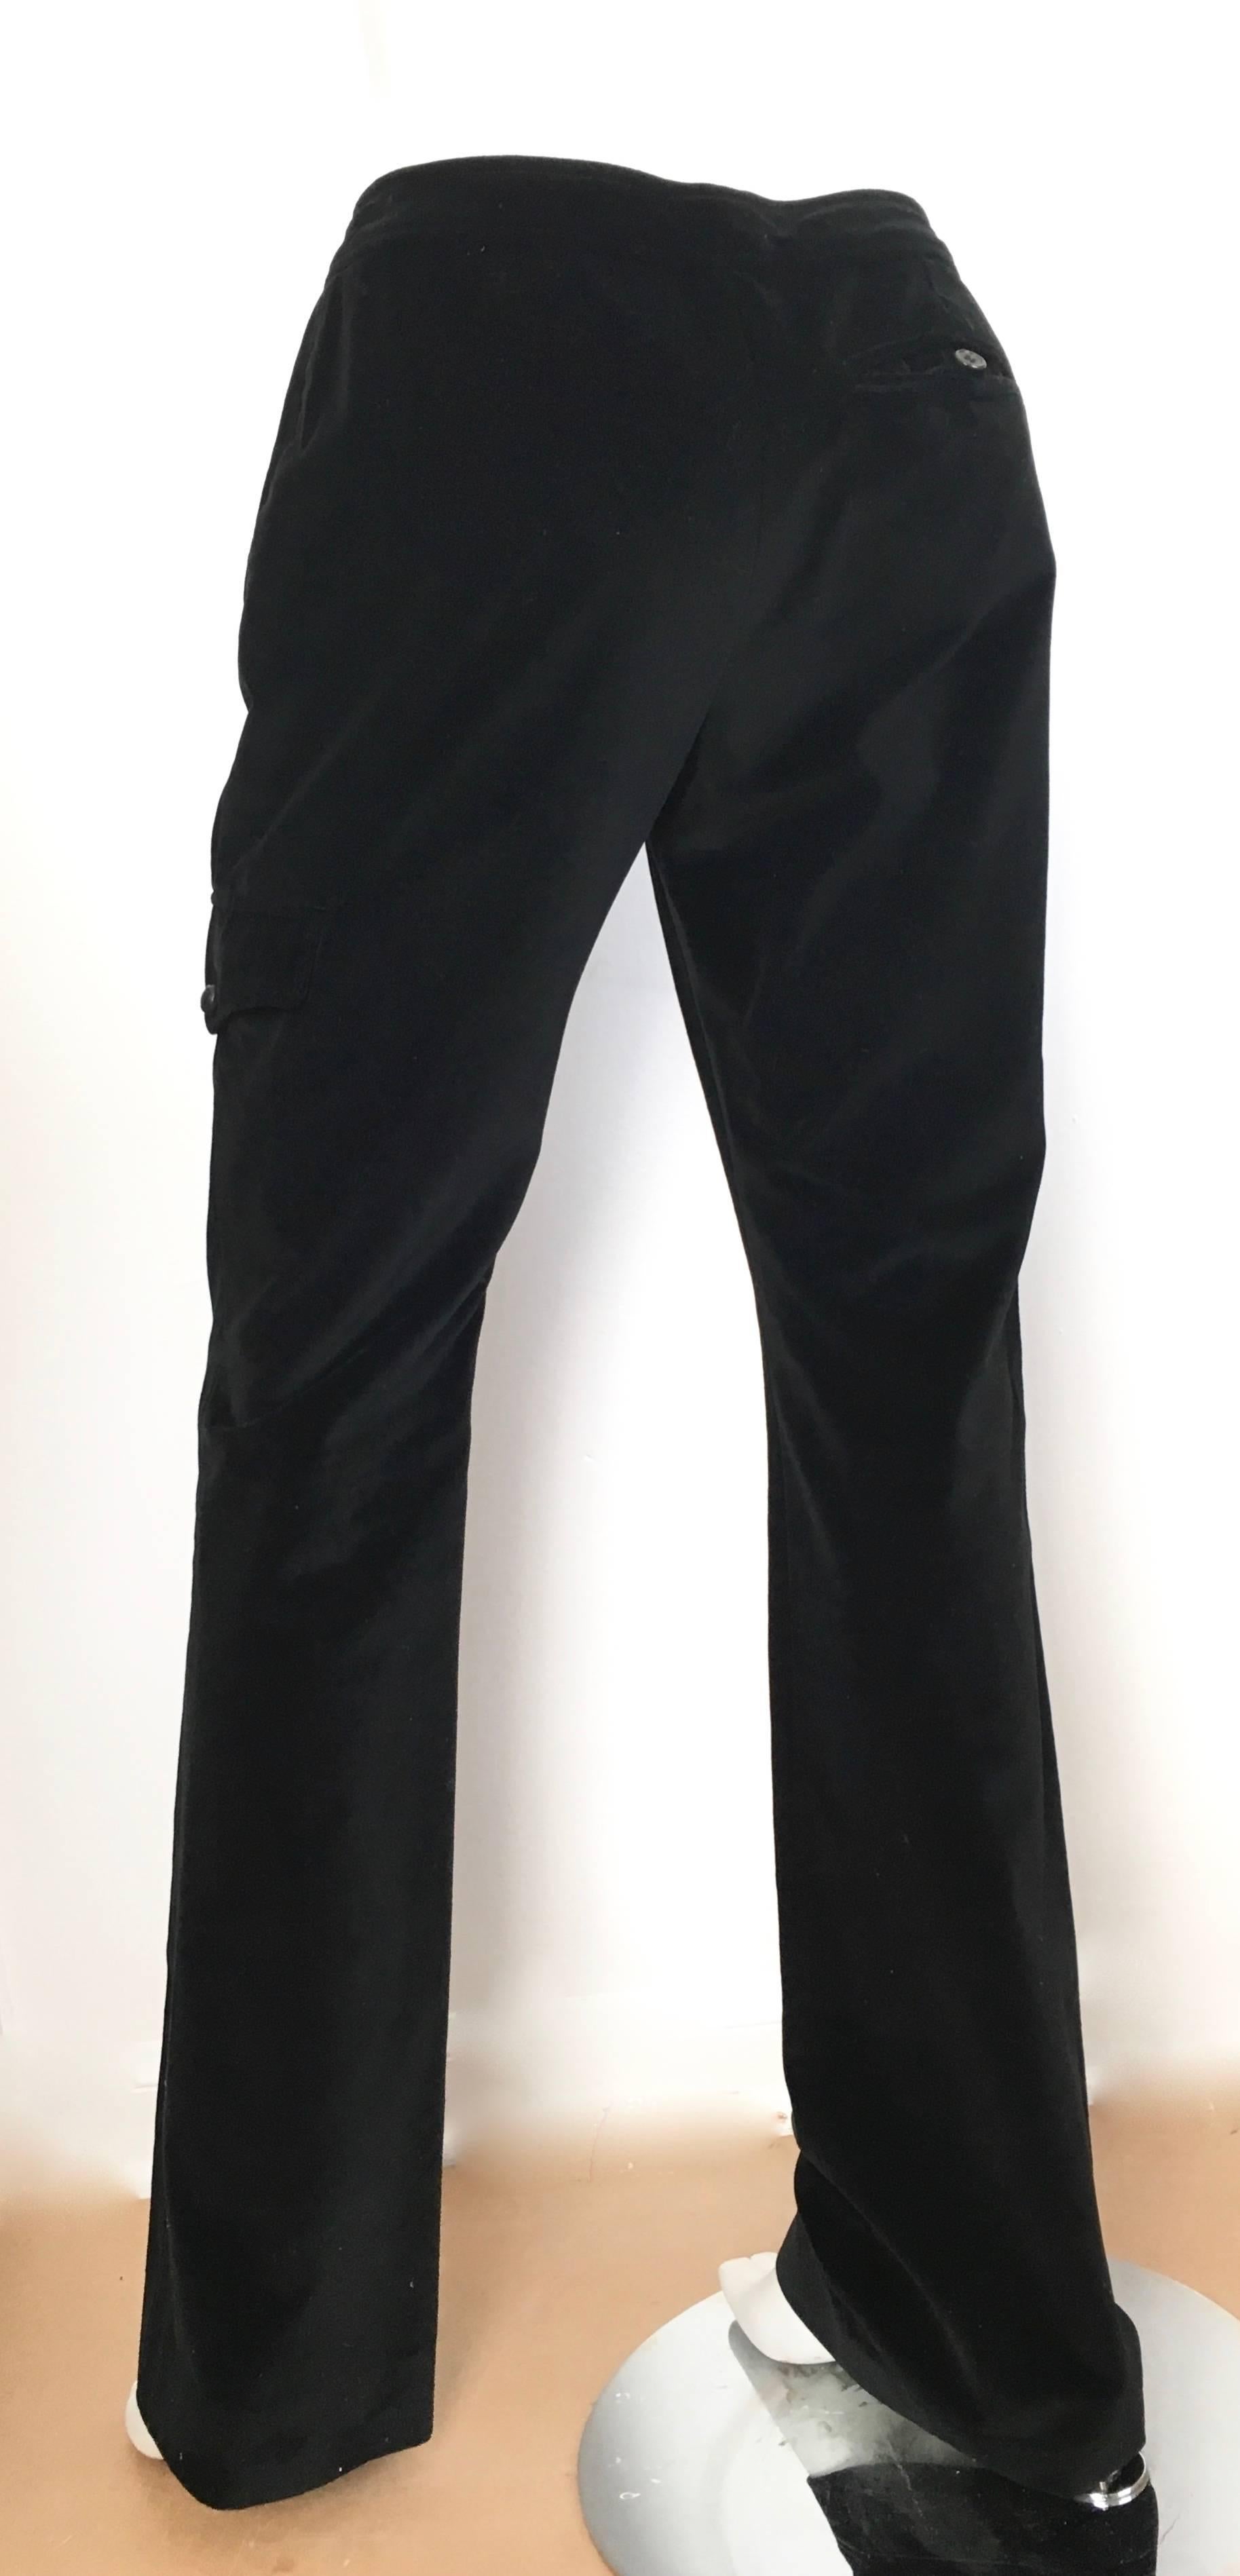 Women's or Men's Yves Saint Laurent Rive Gauche Black Velvet Cargo Pants with Pockets Size 6.